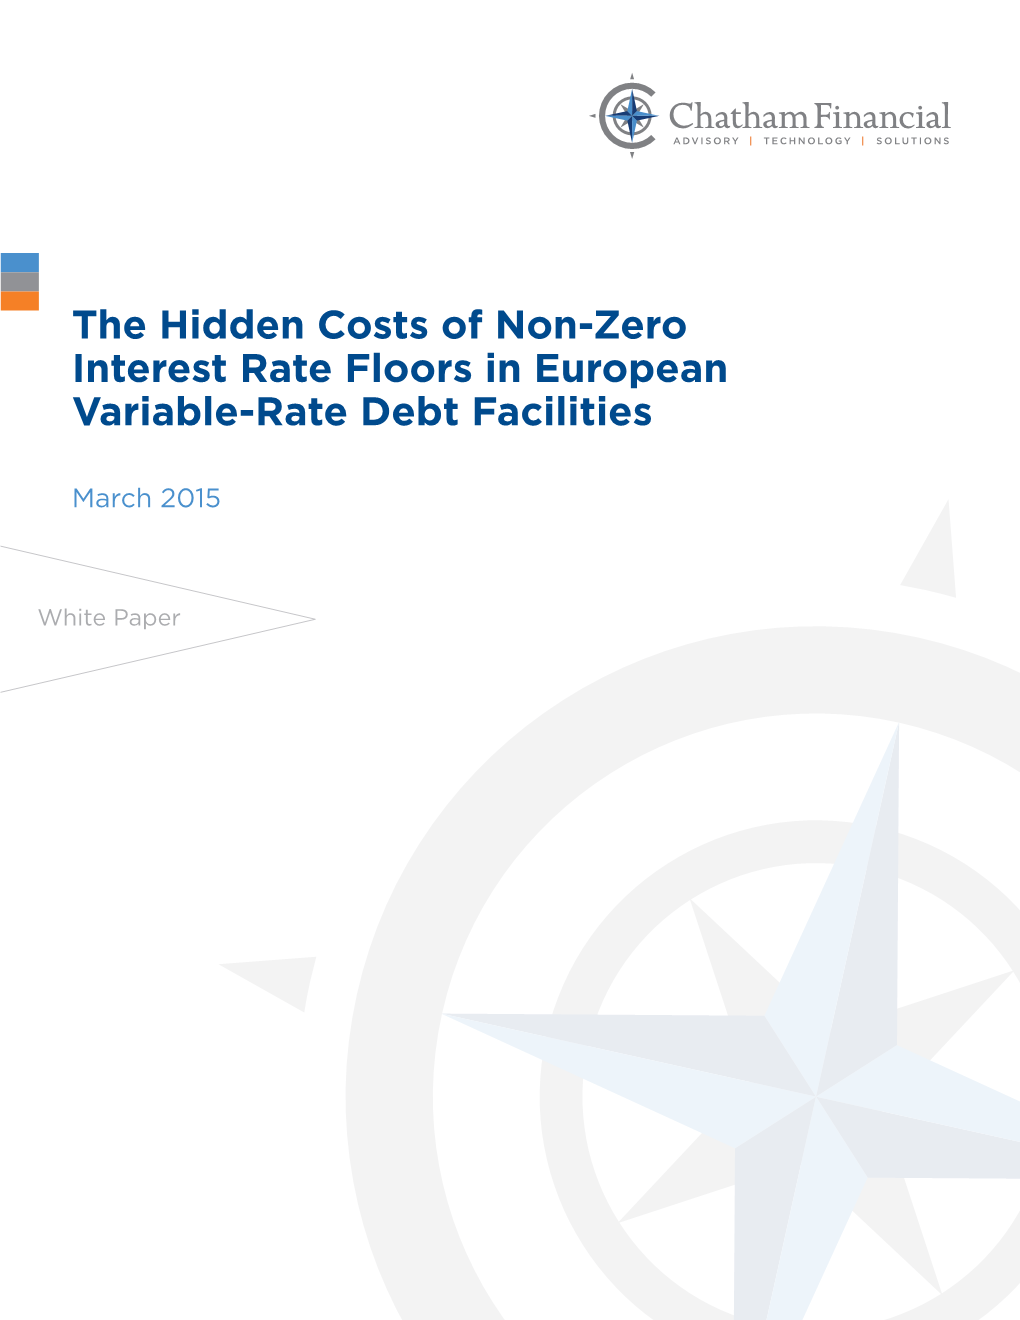 The Hidden Costs of Non-Zero Interest Rate Floors in European Variable-Rate Debt Facilities